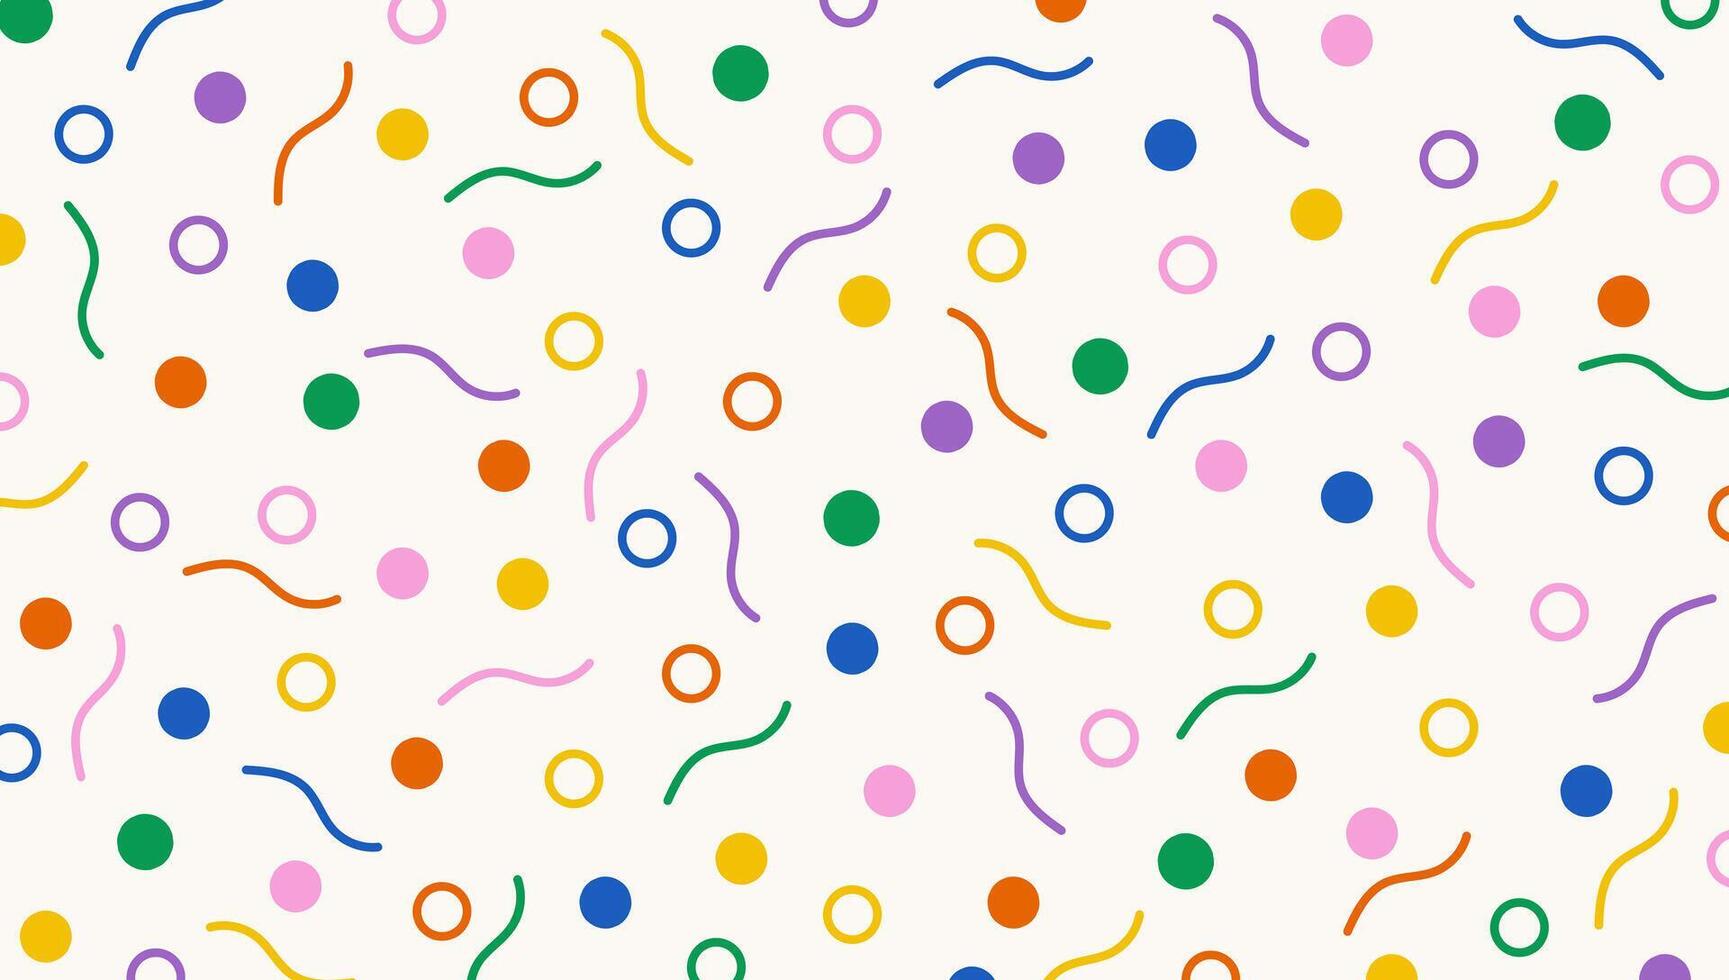 Festive colorful confetti pattern. Creative minimalist style art background. Fun doodle design vector